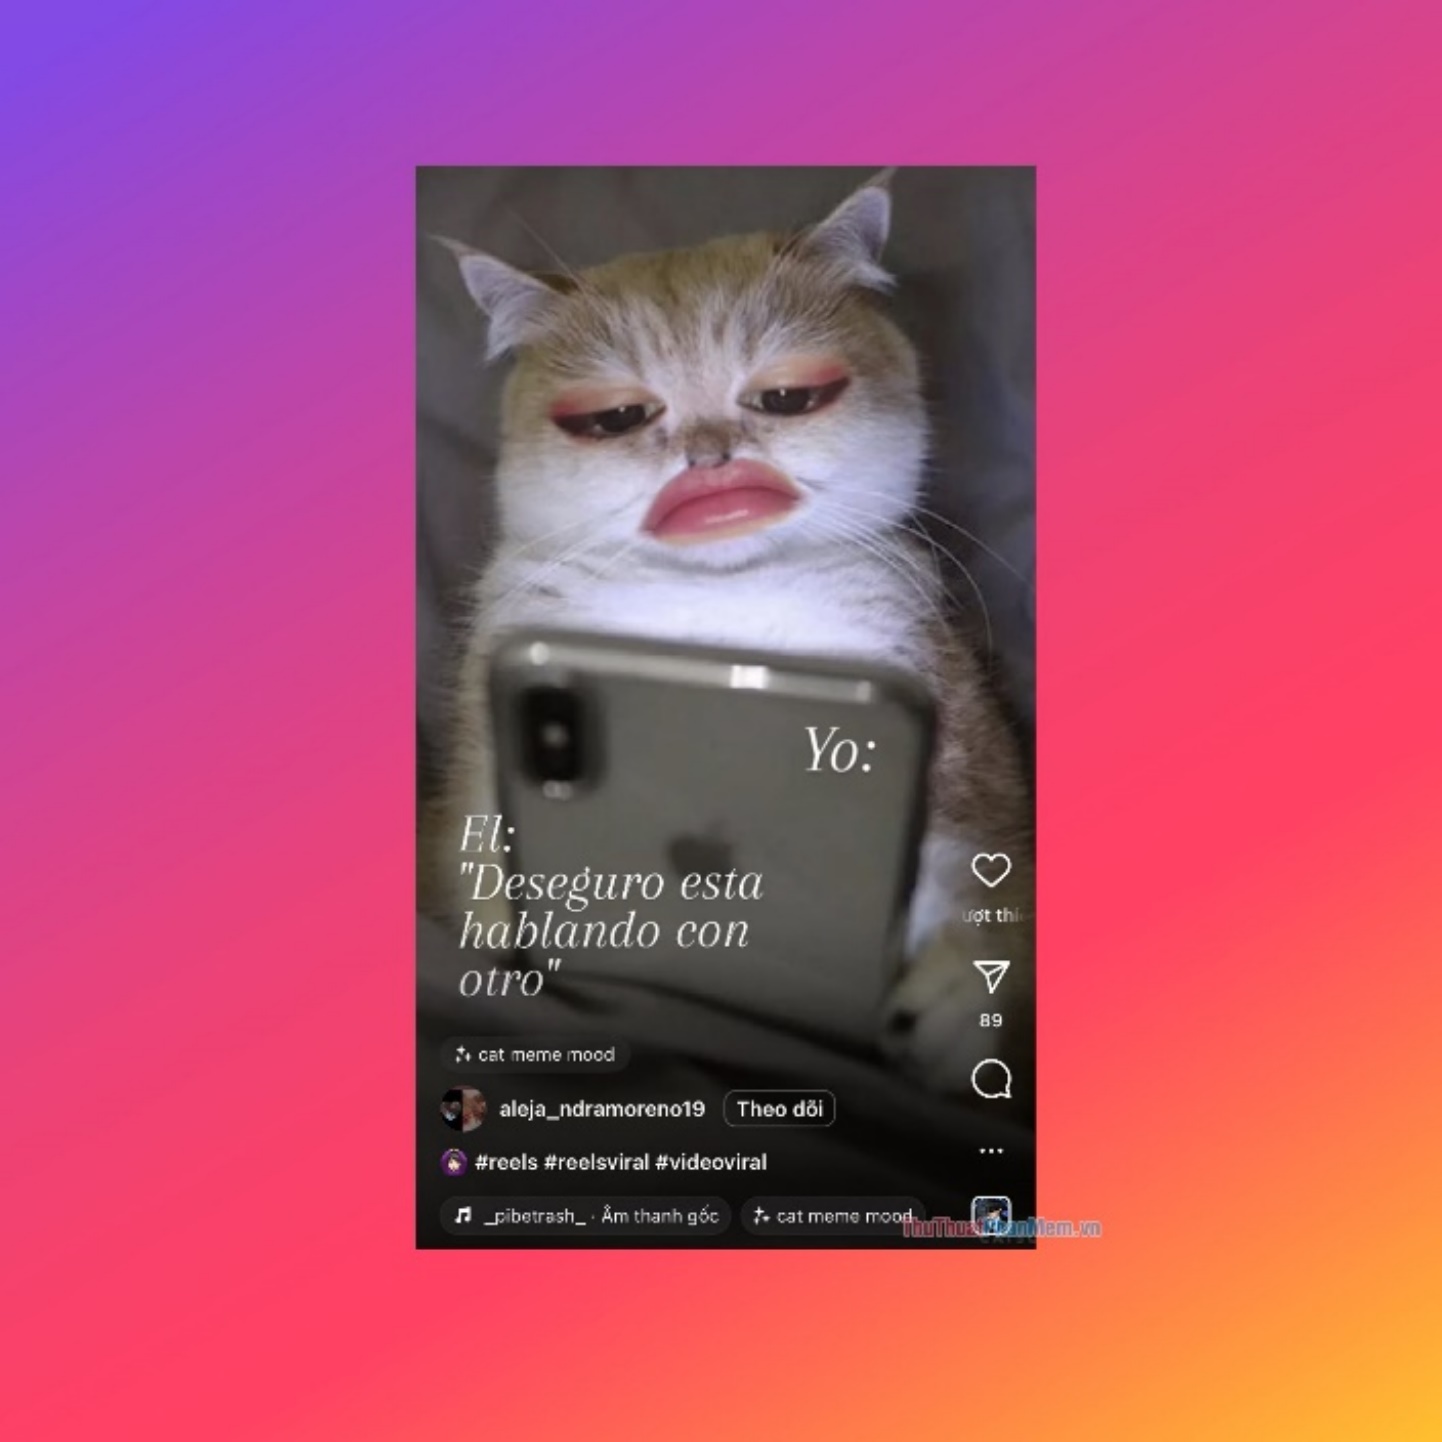 Cat Meme Mood – Filter che mặt, ghép mặt mèo